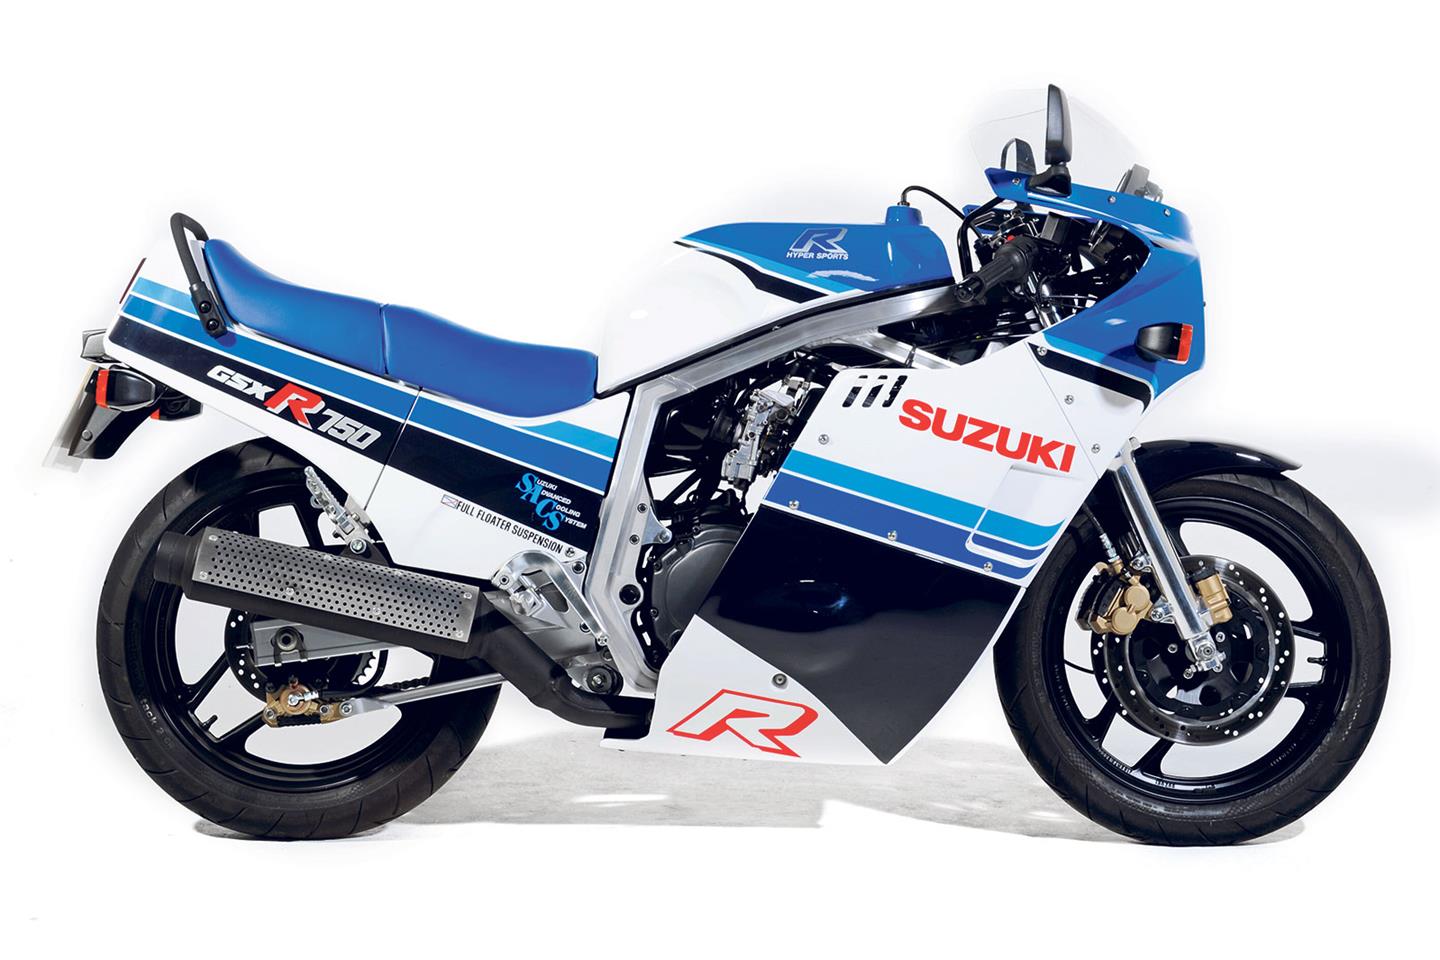 Suzuki GSX-R750 tech special – You've come a long way